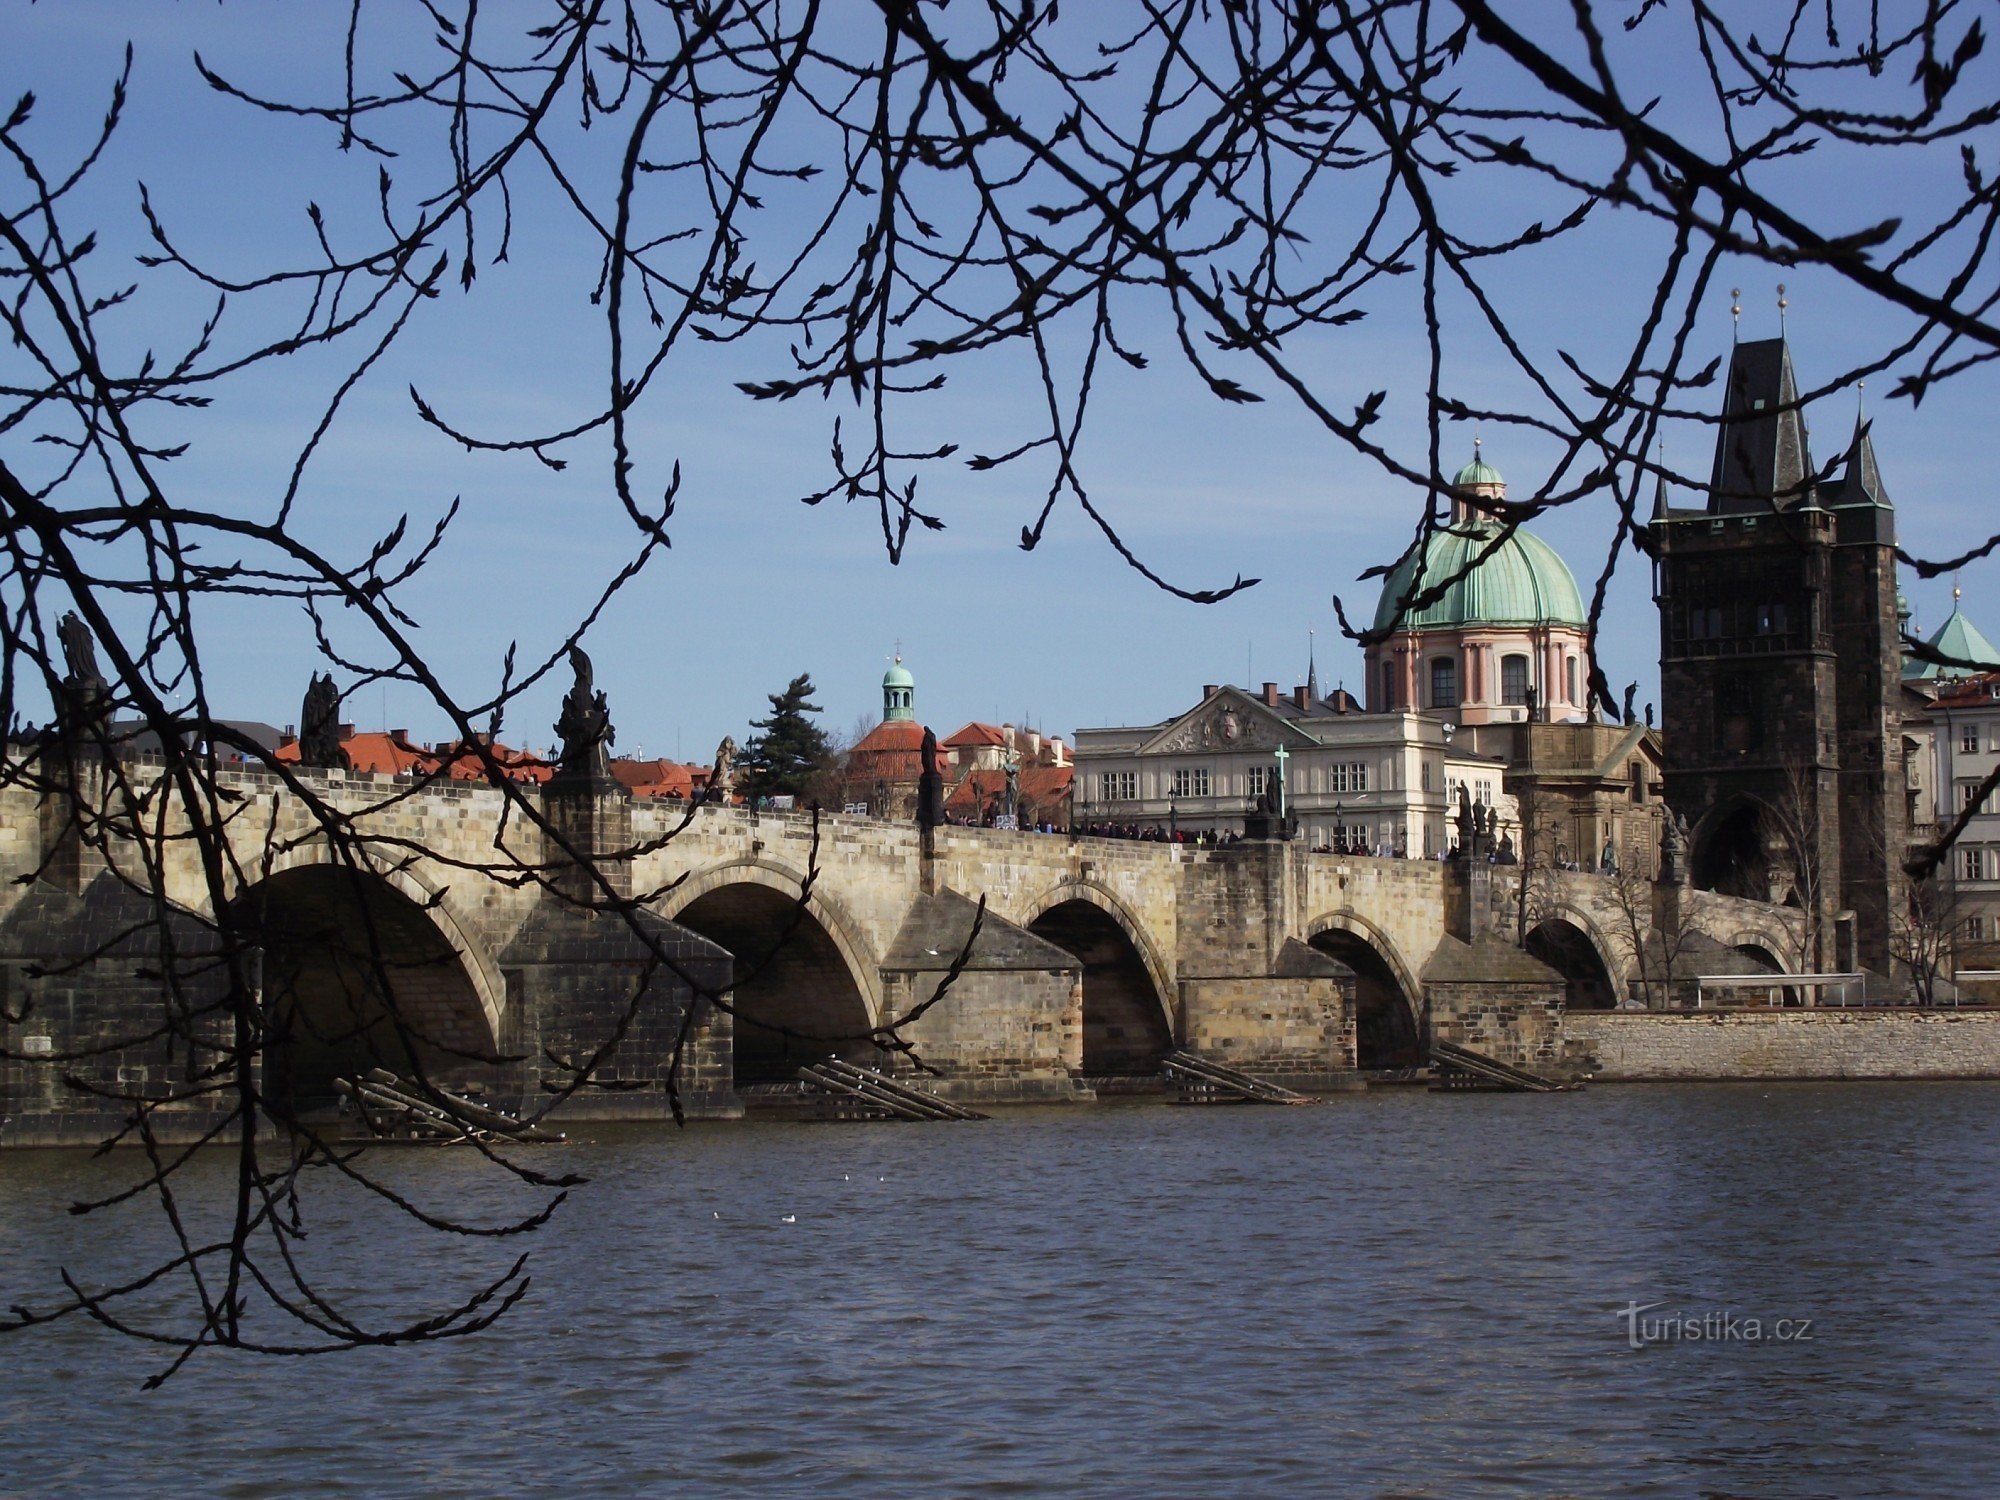 Erotik på Karlsbroen (Prag - Old Town Bridge Tower)